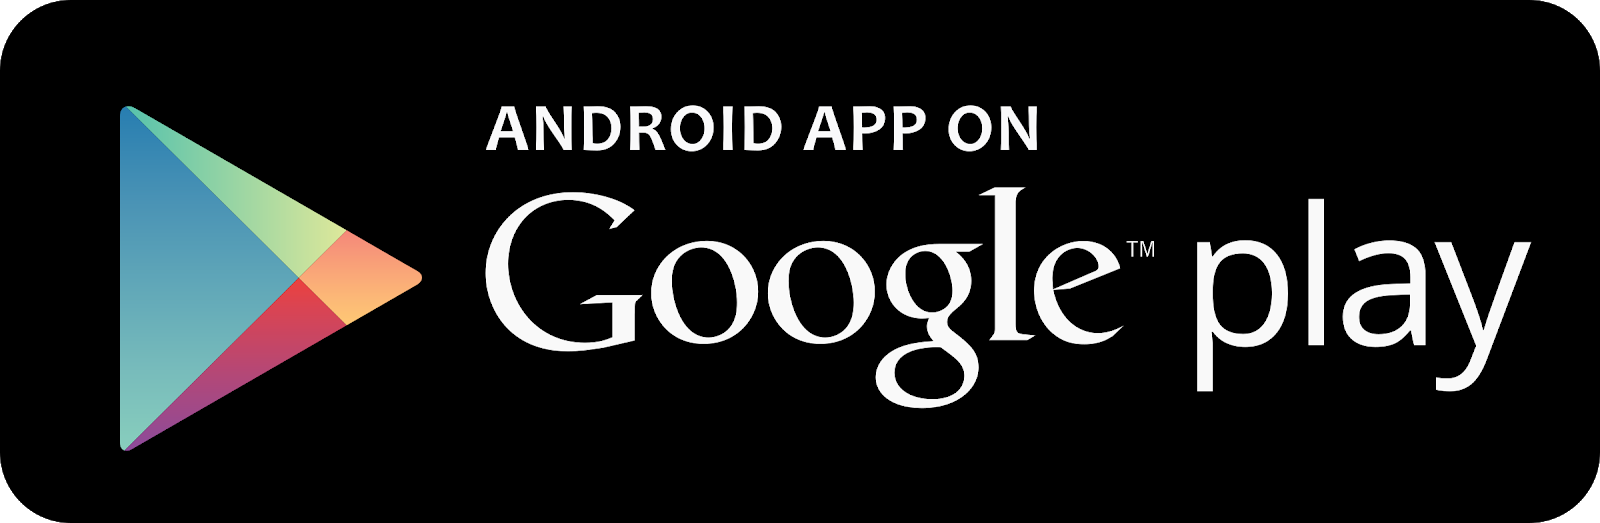 Apk On Google Play